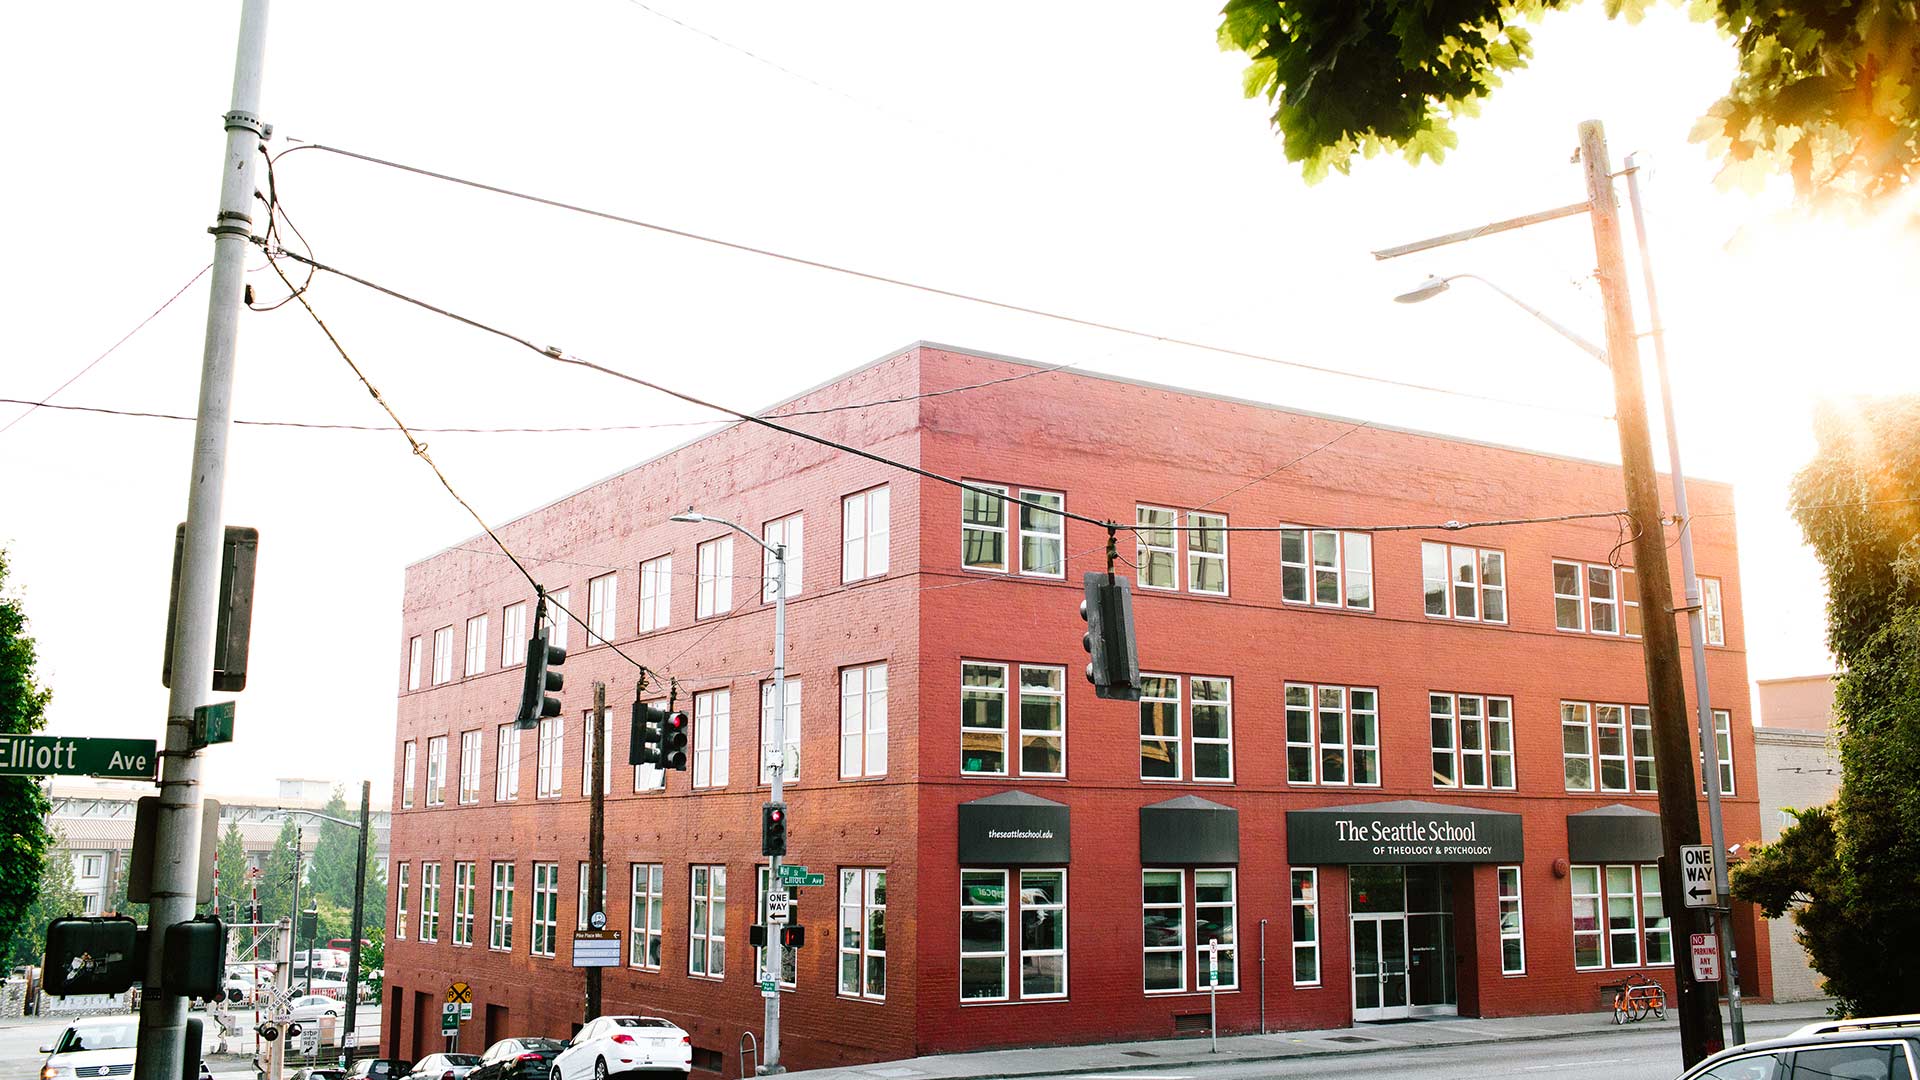 The Seattle School Building